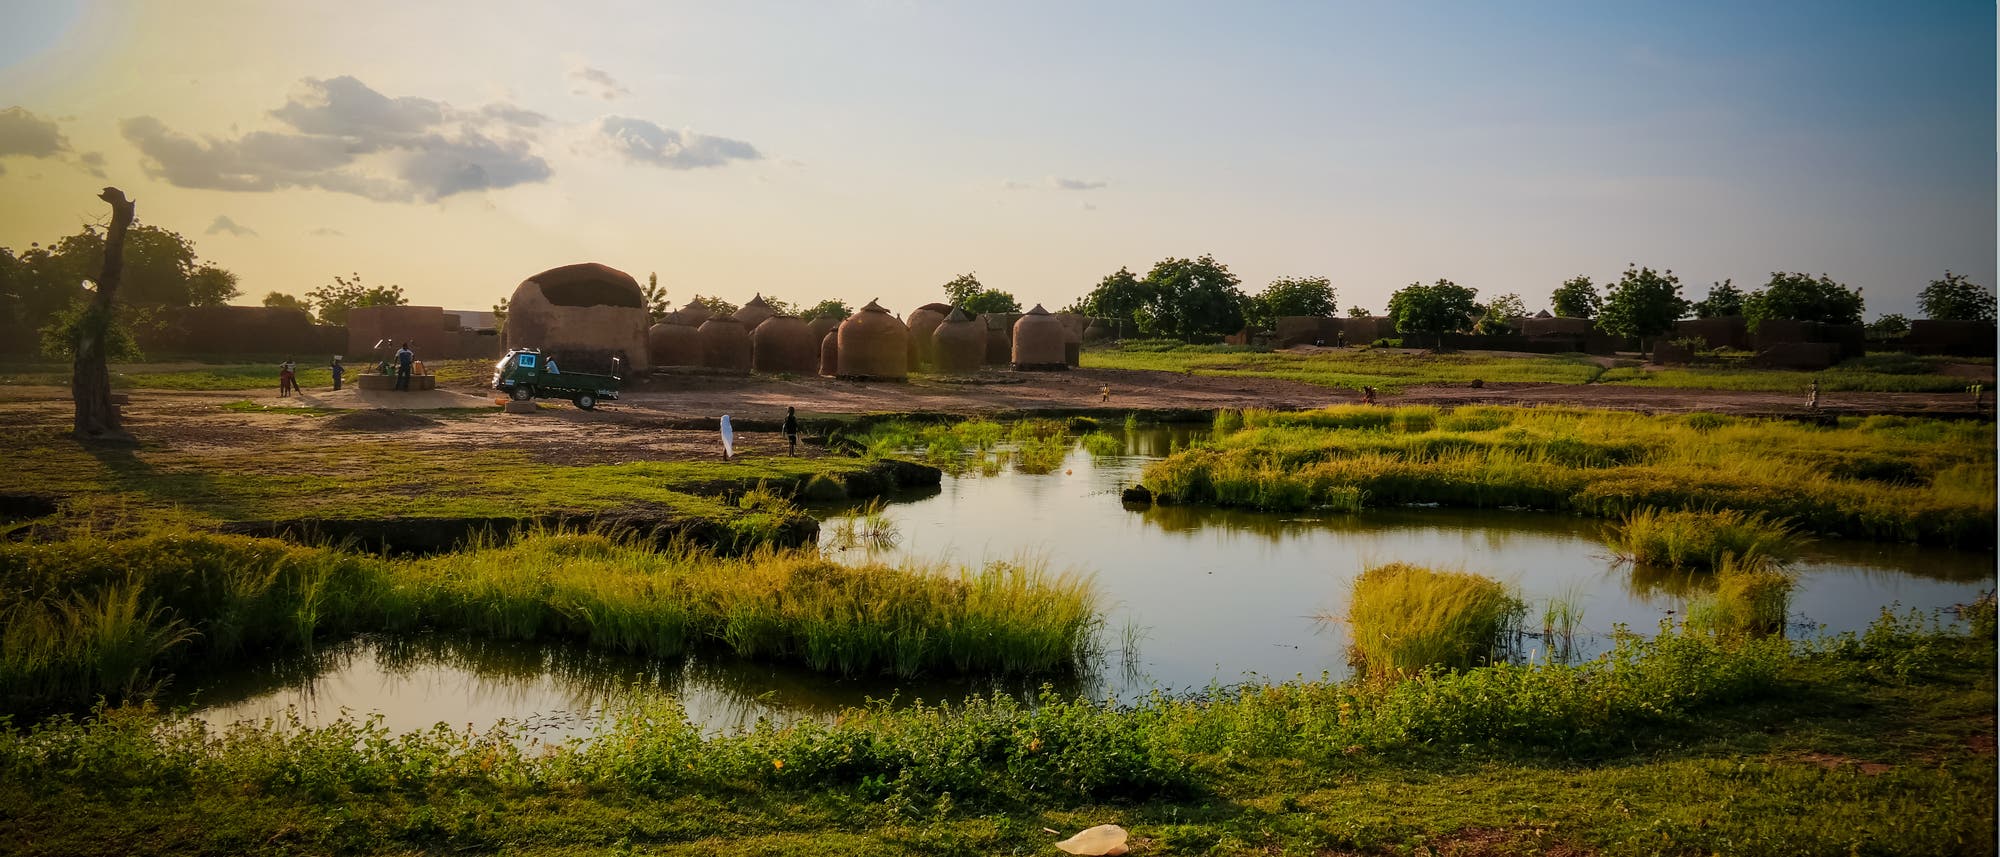 Das Dorf Bkonni in Niger